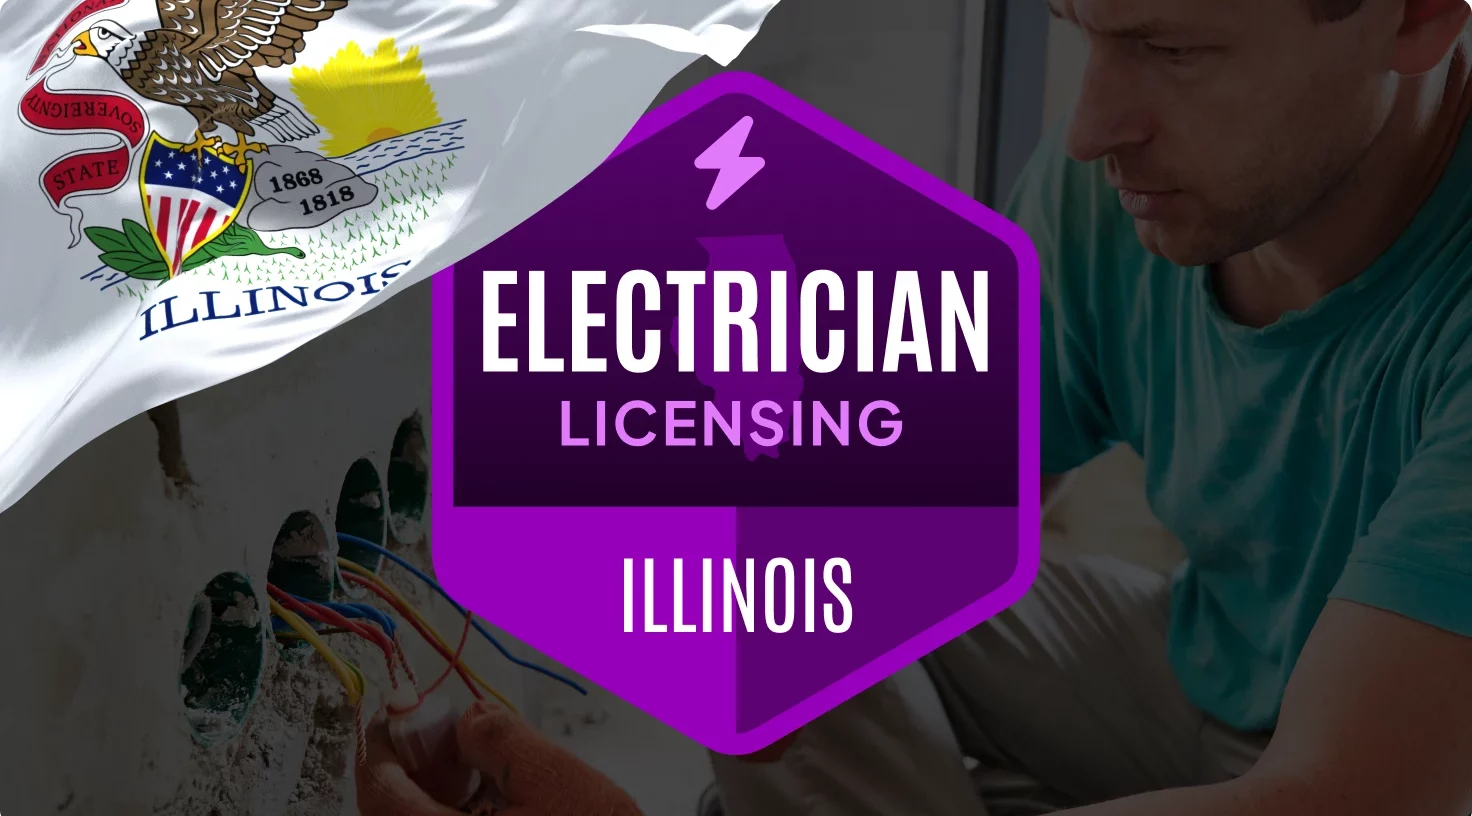 Electrician Illinois License Aspect Ratio 1472 819 Aspect Ratio 1472 816